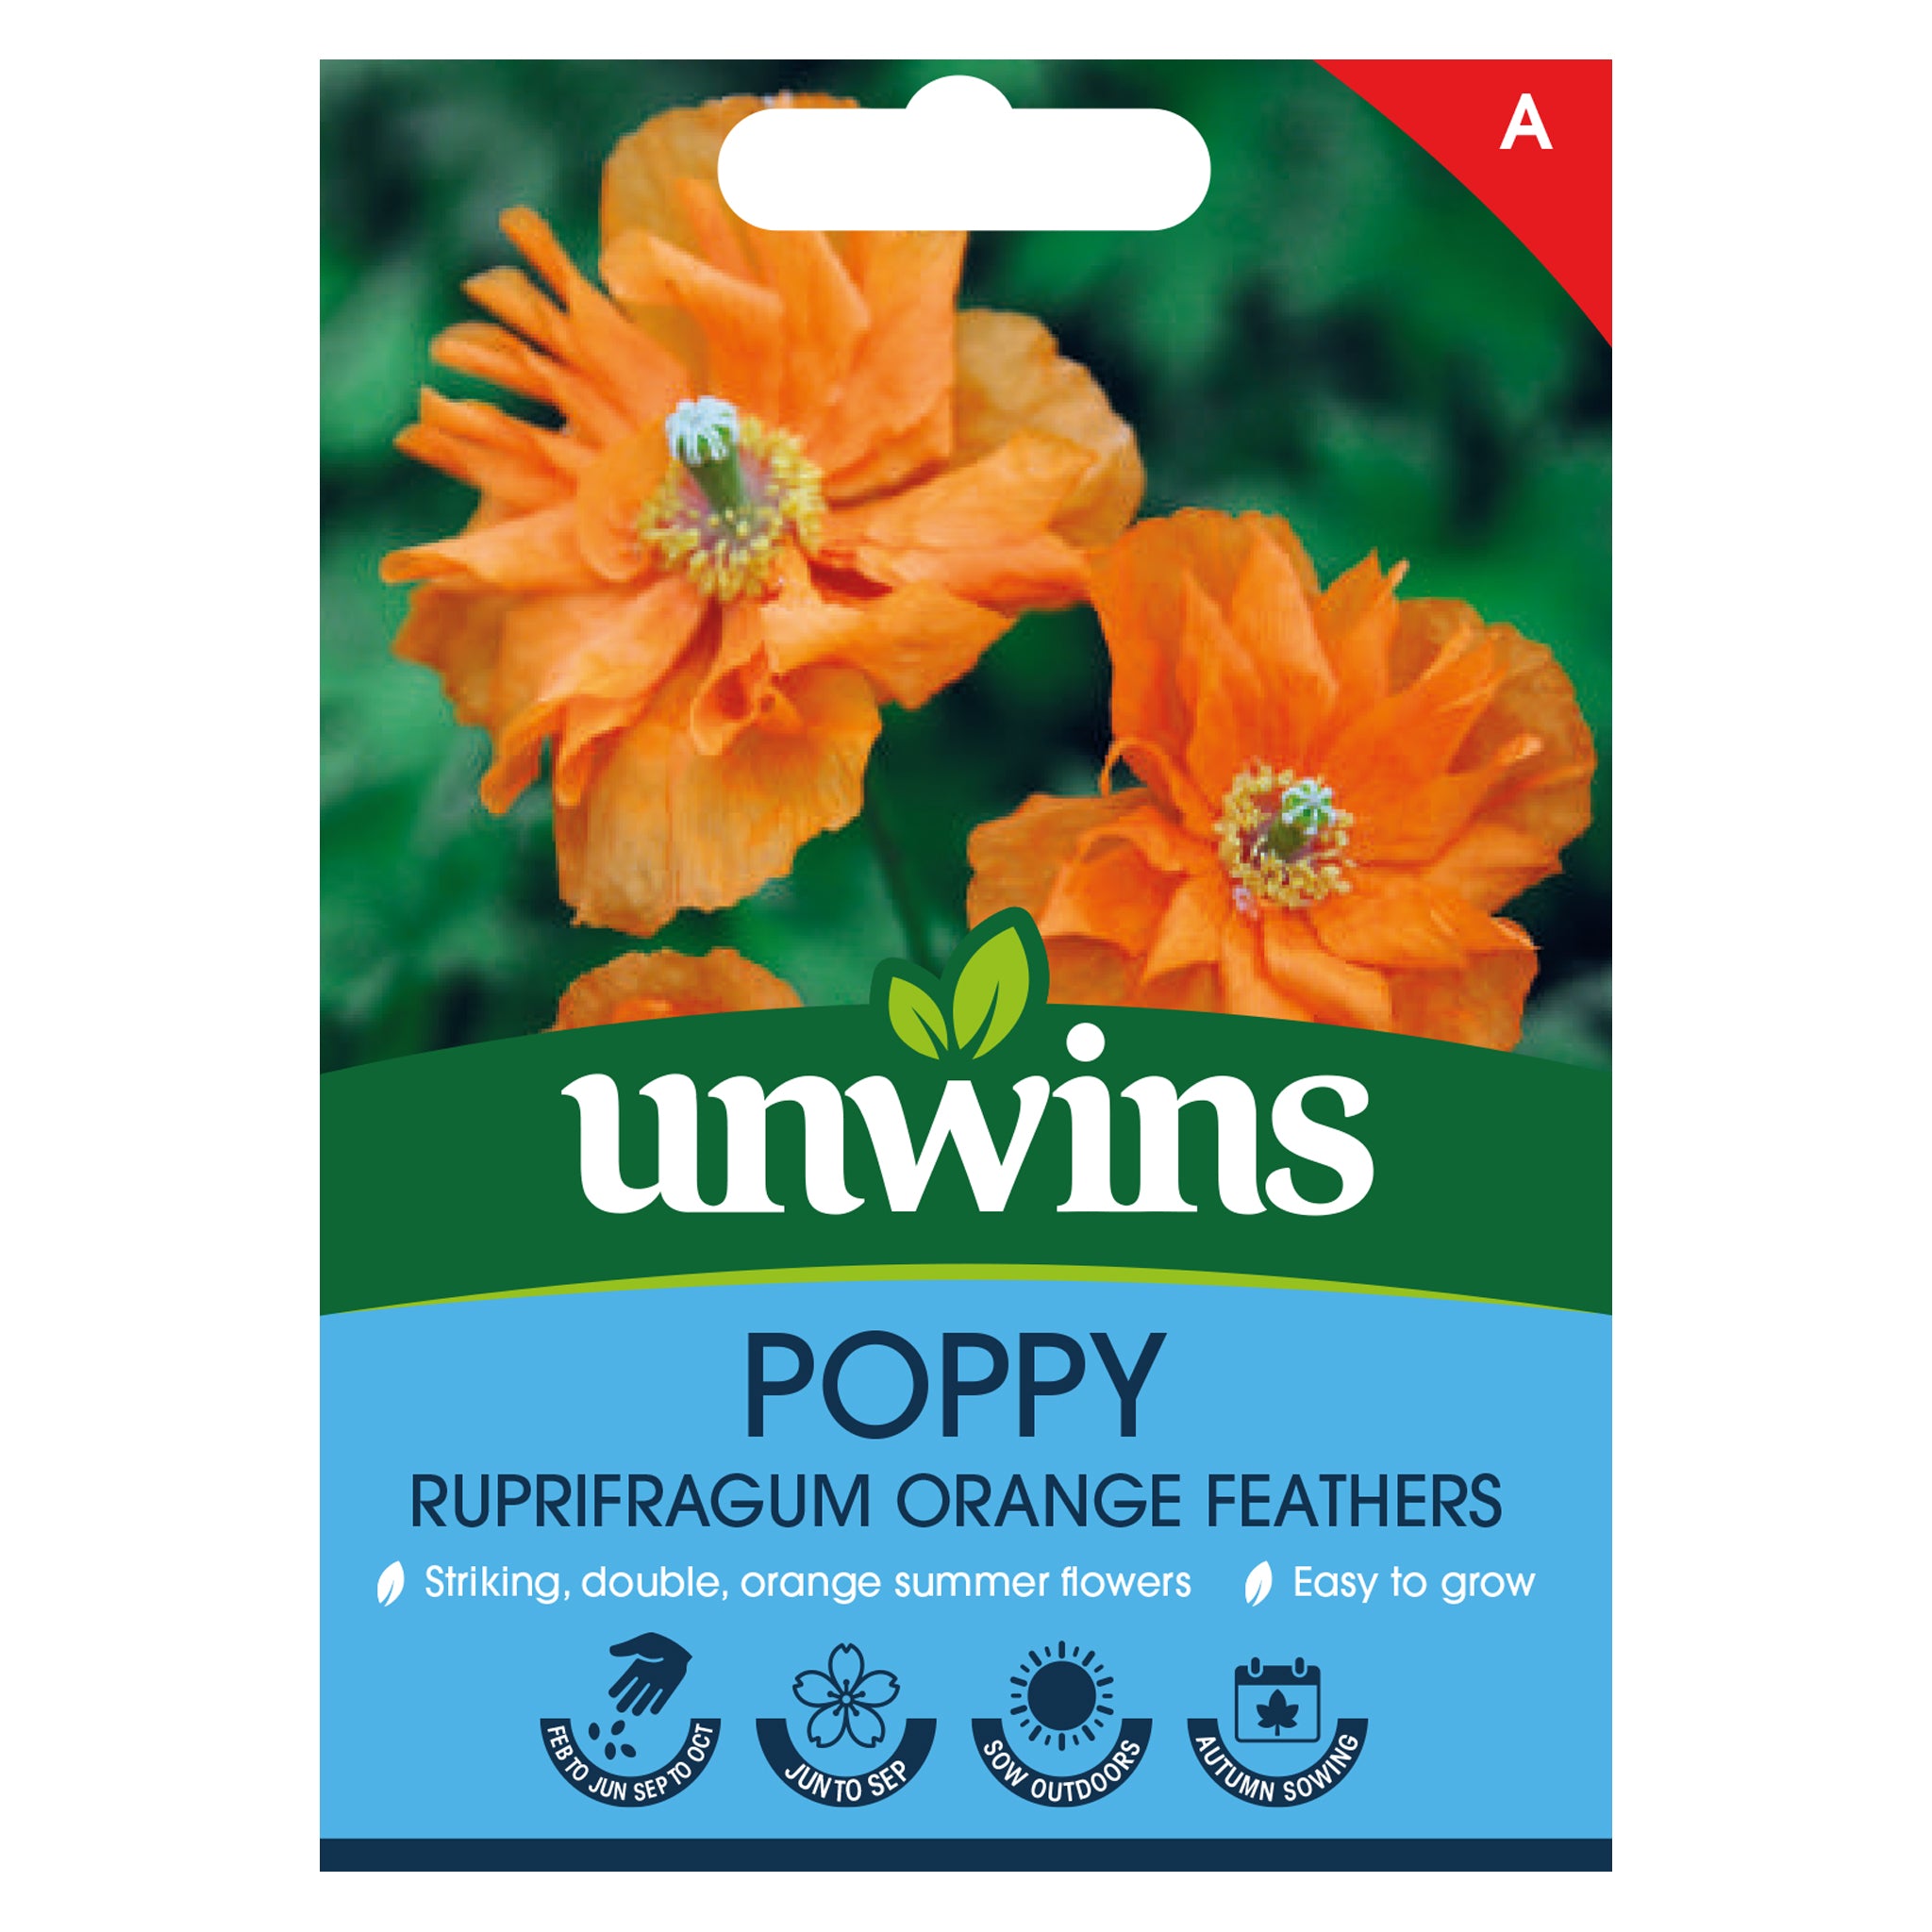 Unwins Poppy Rupifragum Orange Feathers Seeds